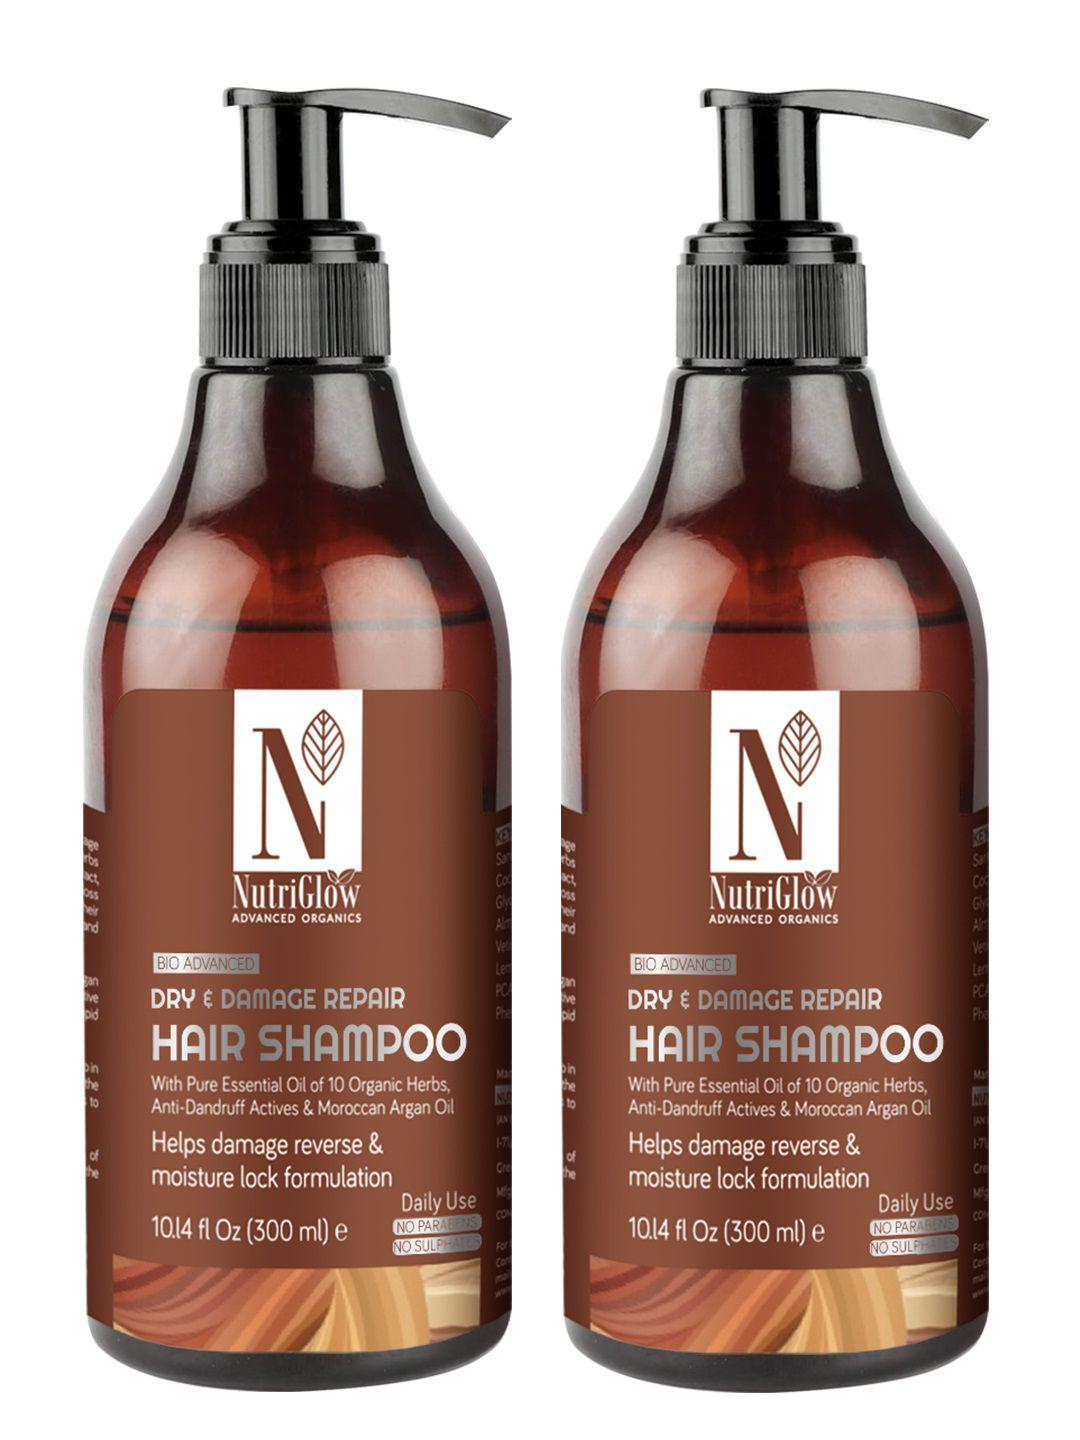 nutriglow advanced organics set of 2 dry & damage repair hair shampoo - 300 ml each